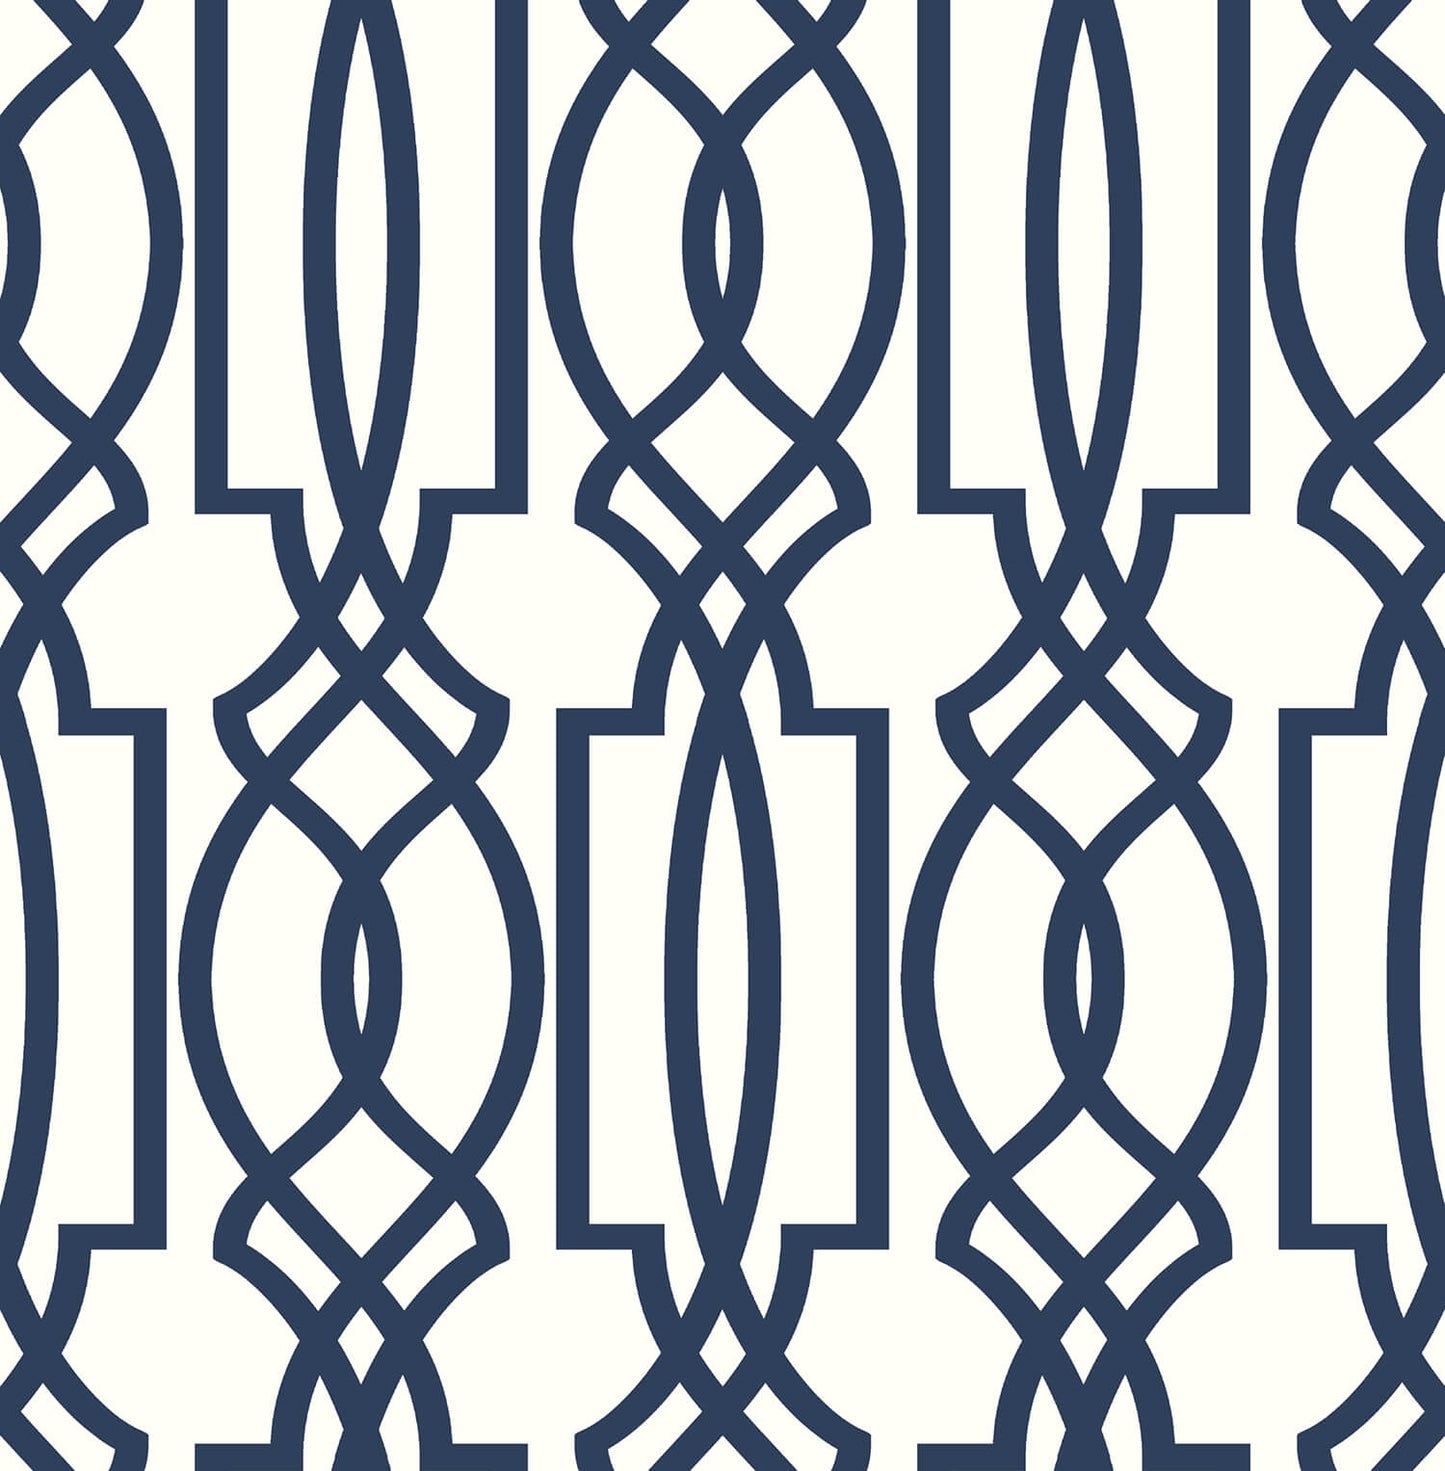 NextWall Deco Lattice Peel & Stick Wallpaper - Navy Blue